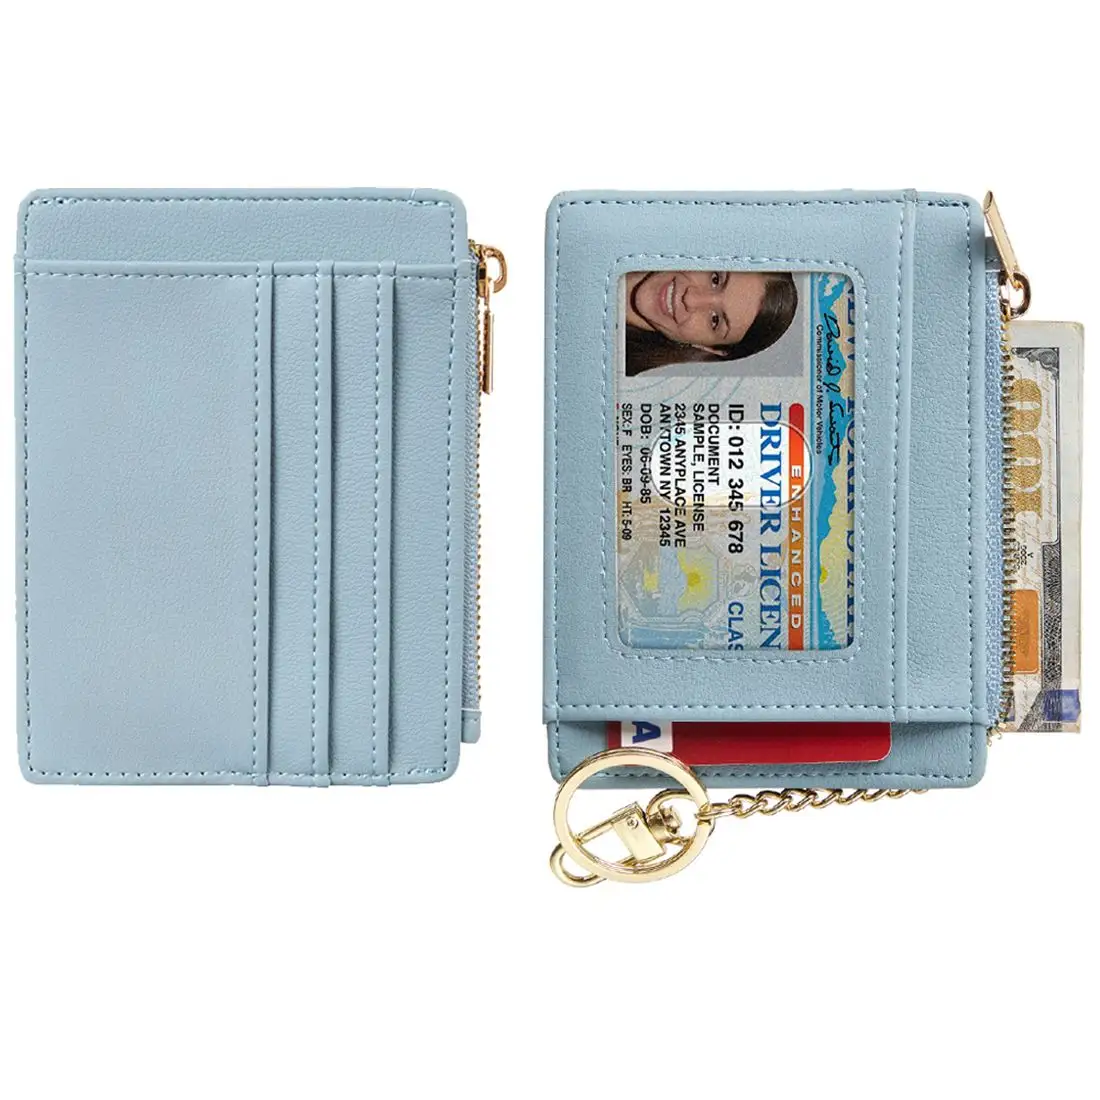 Produsen Cina Dompet Kulit Rfid penyimpan kartu kredit Atm warna biru cetak kustom Oem